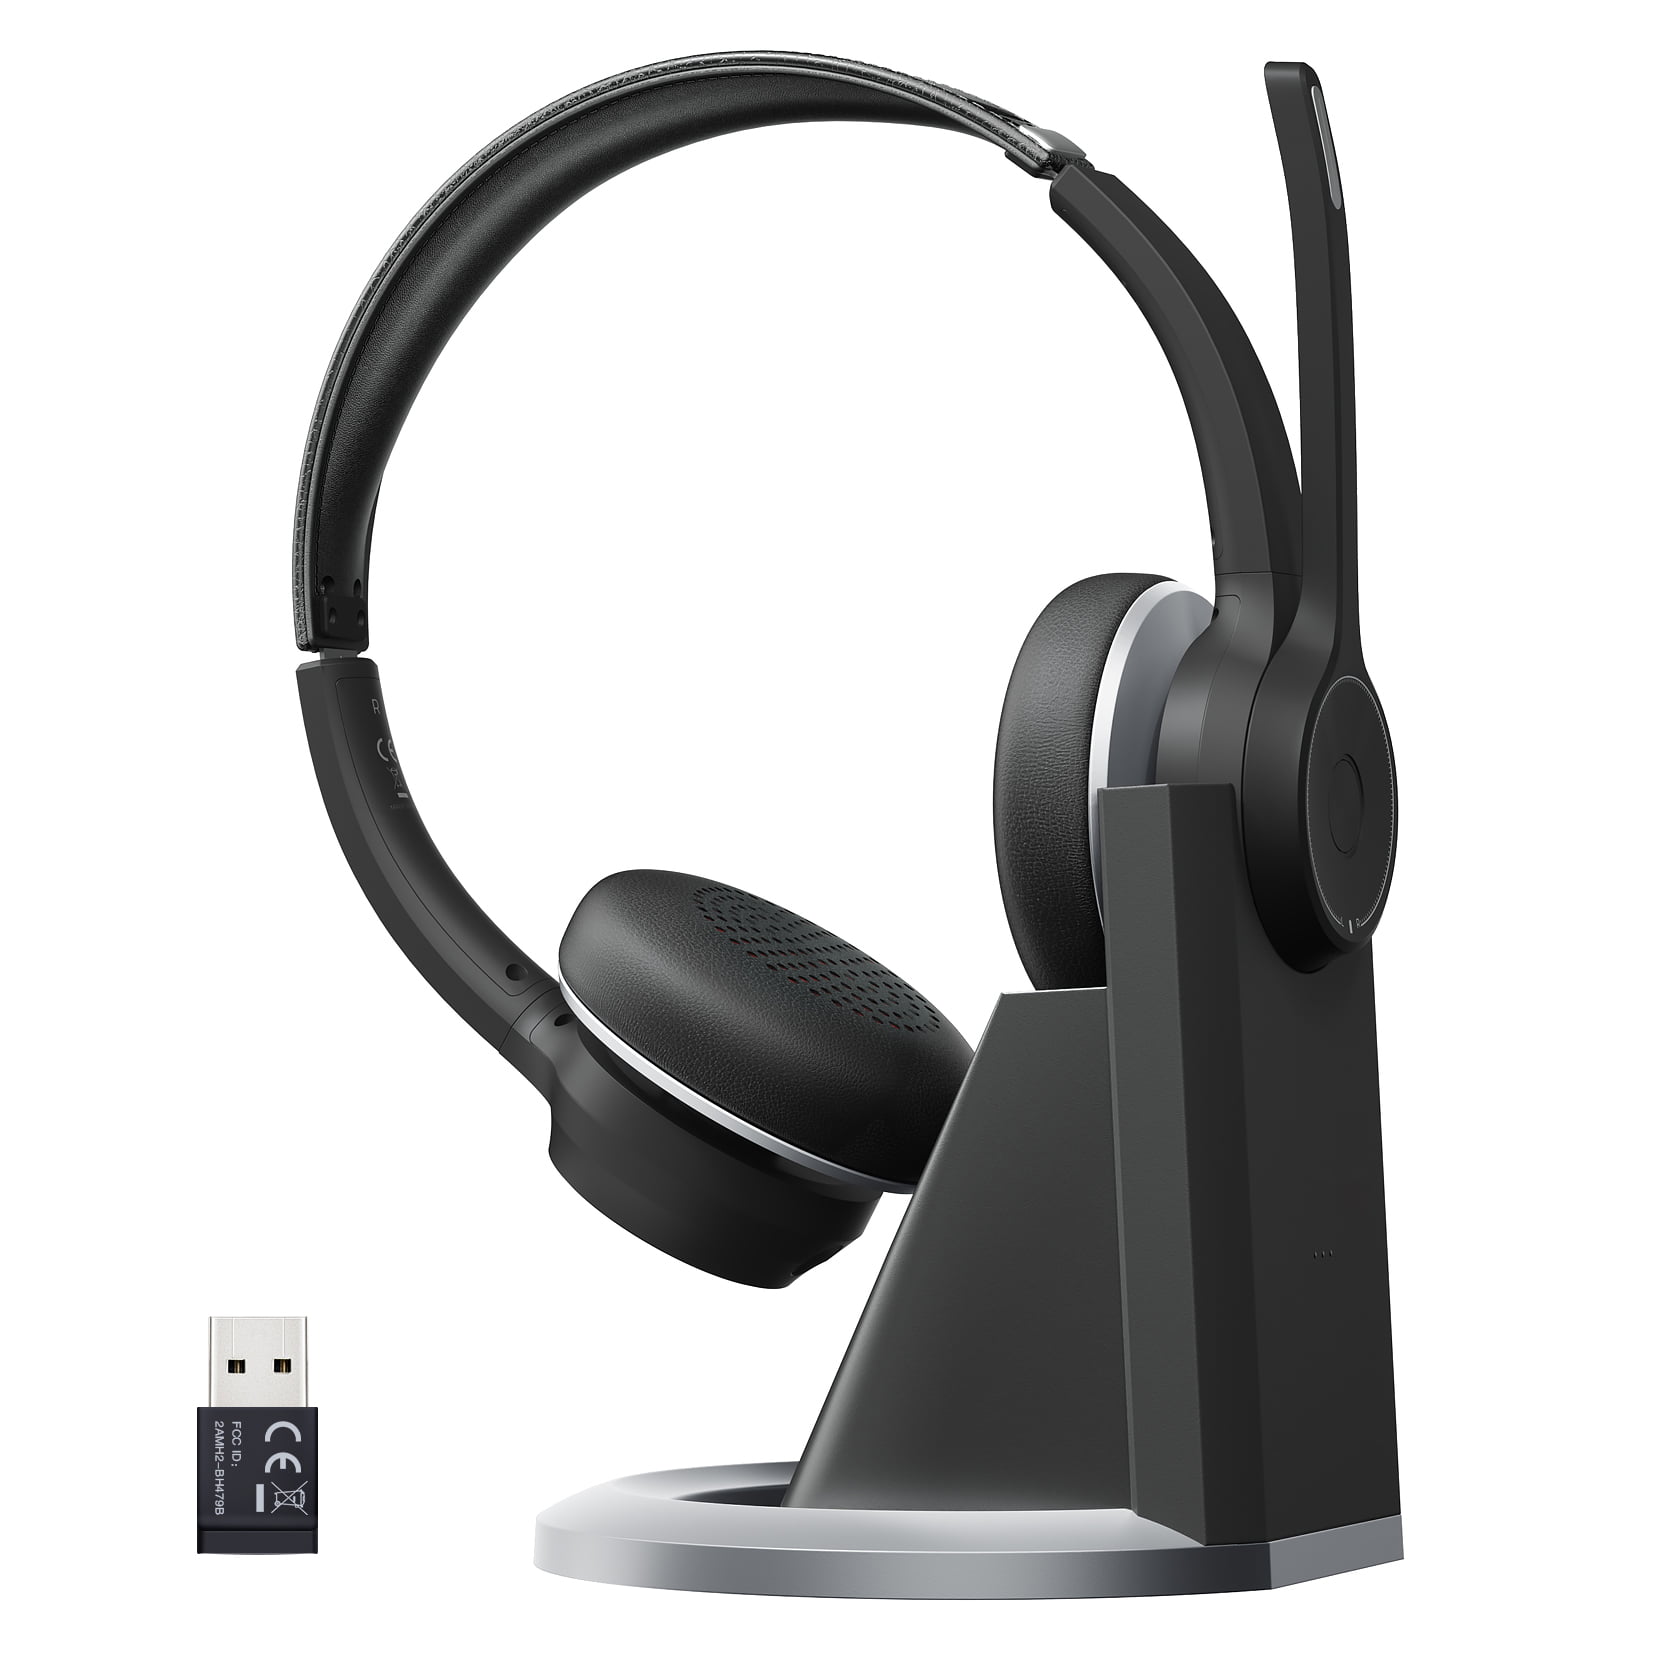 Spielzeit für LKW Fahrer Computer Office Call Center Skype Bluetooth Headset PC mit Microfon TaoTronics kabellos Kopfhörer Smart AI Noise Cancellation 34Std